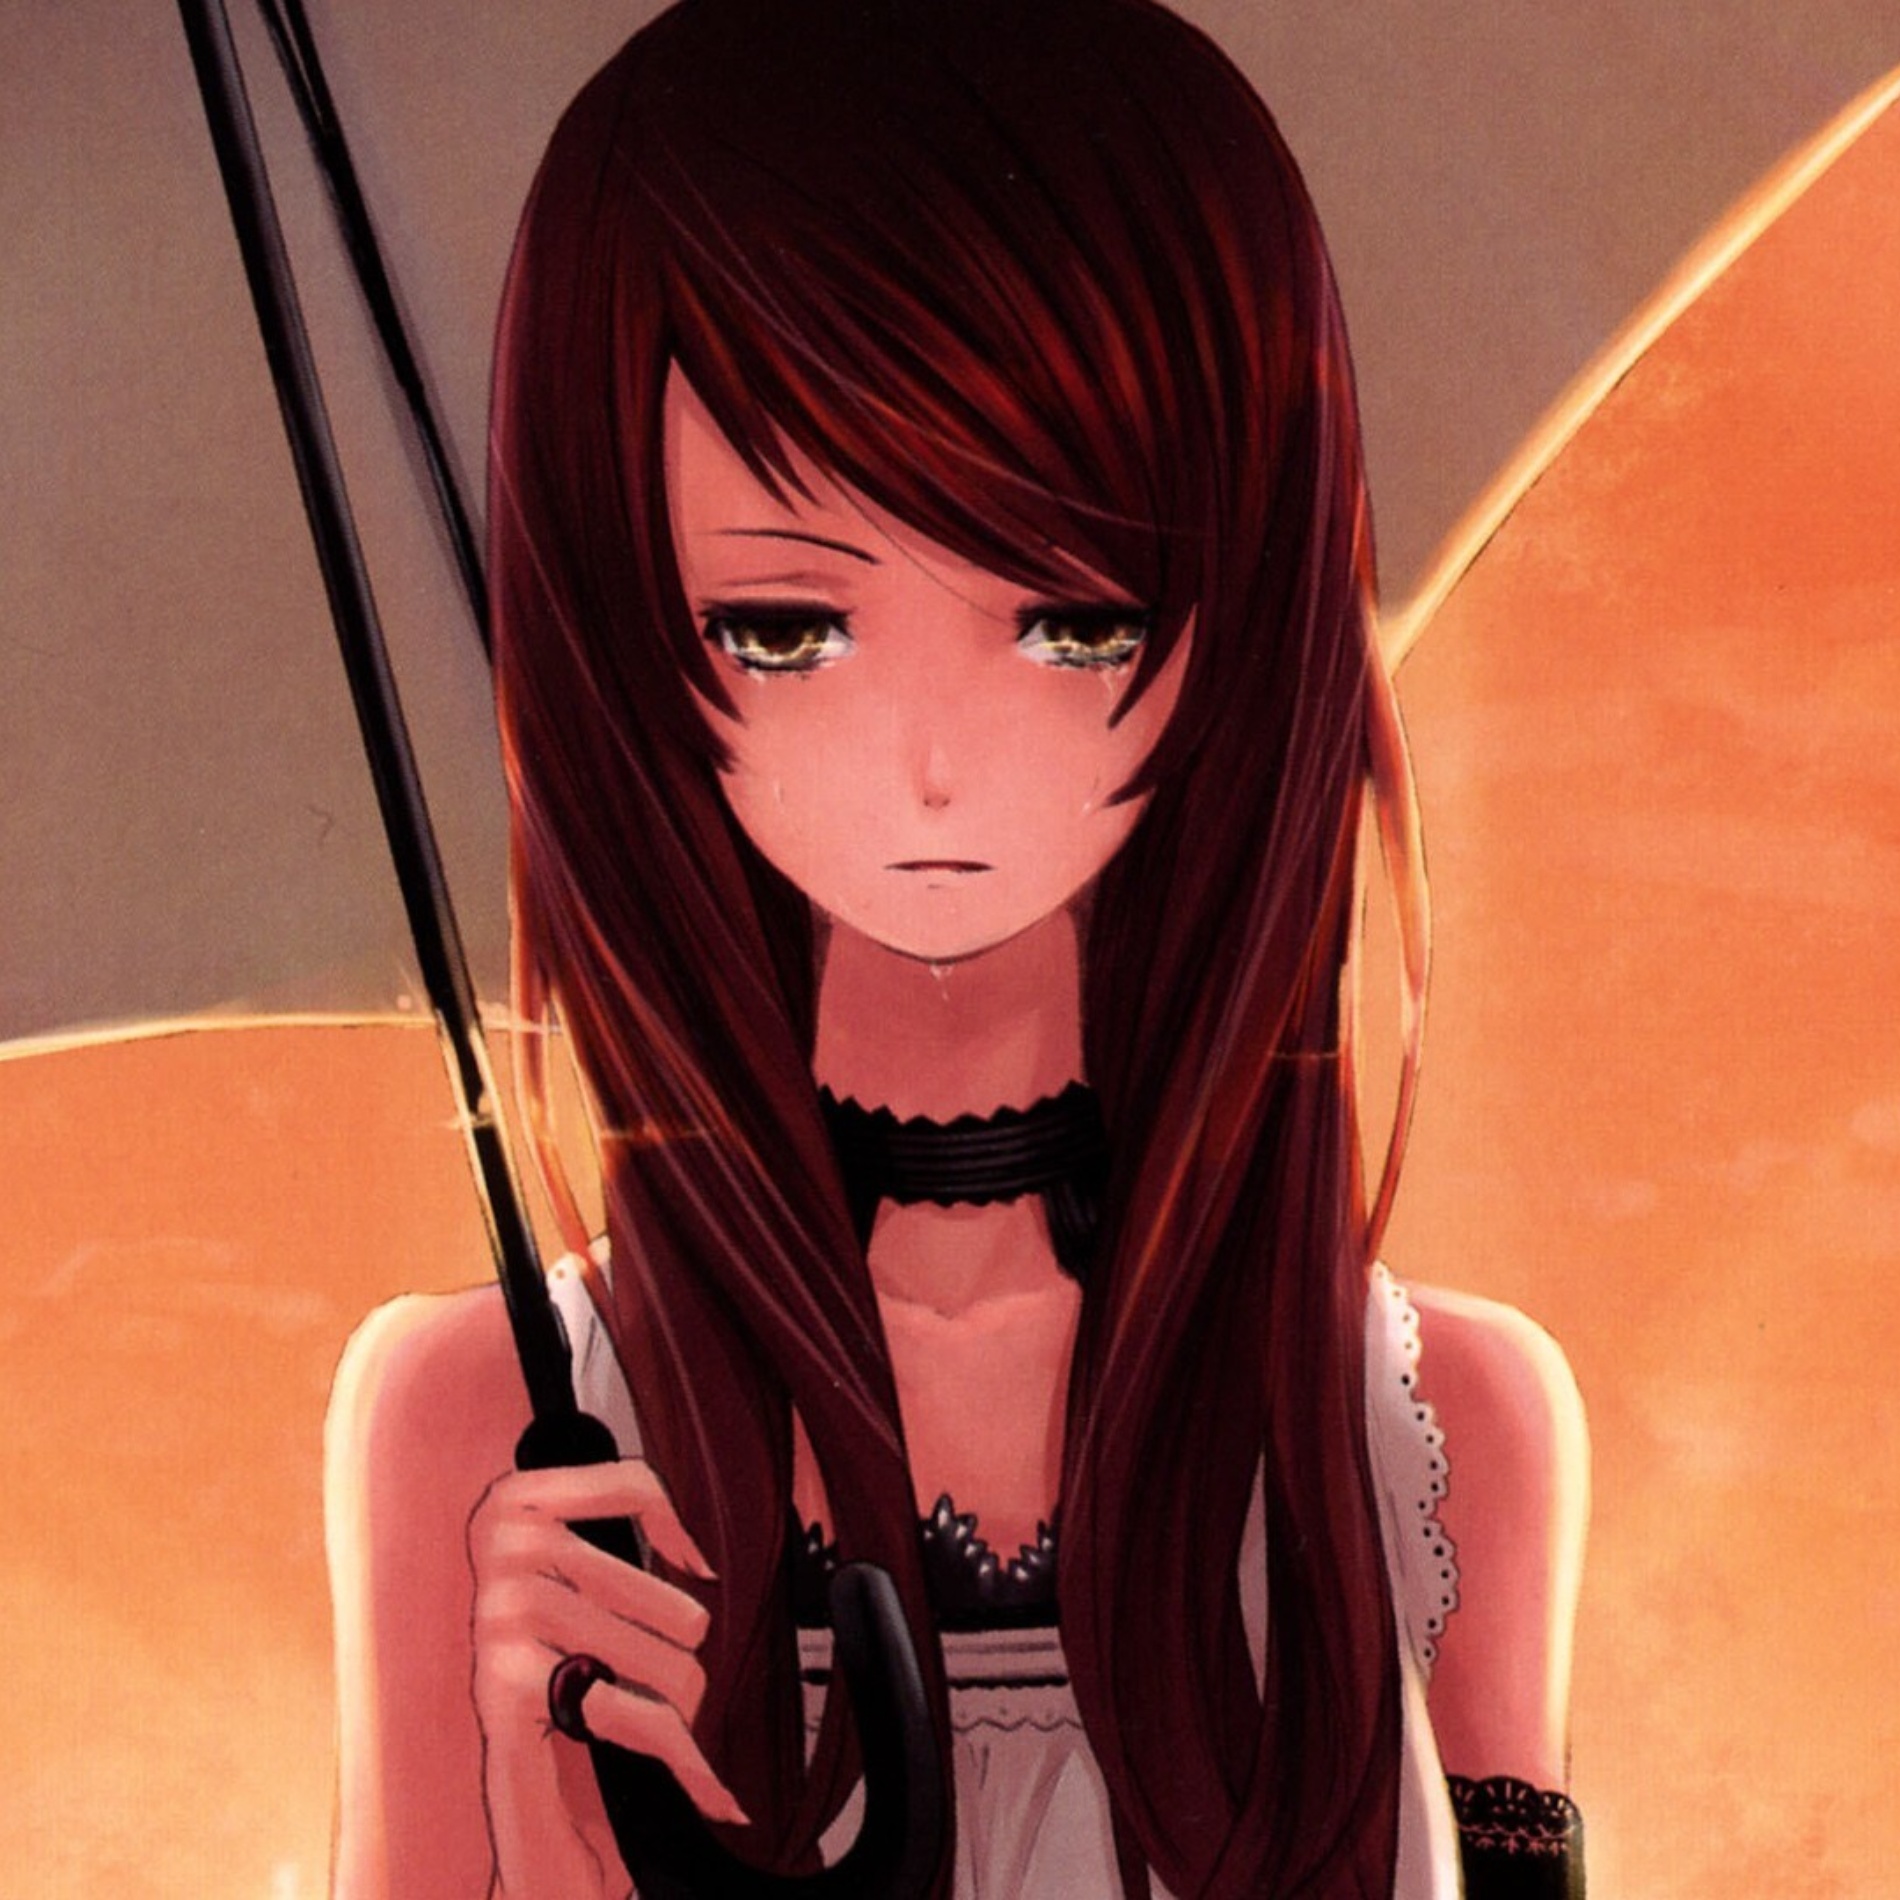 Sad Anime Girl Profile Picture